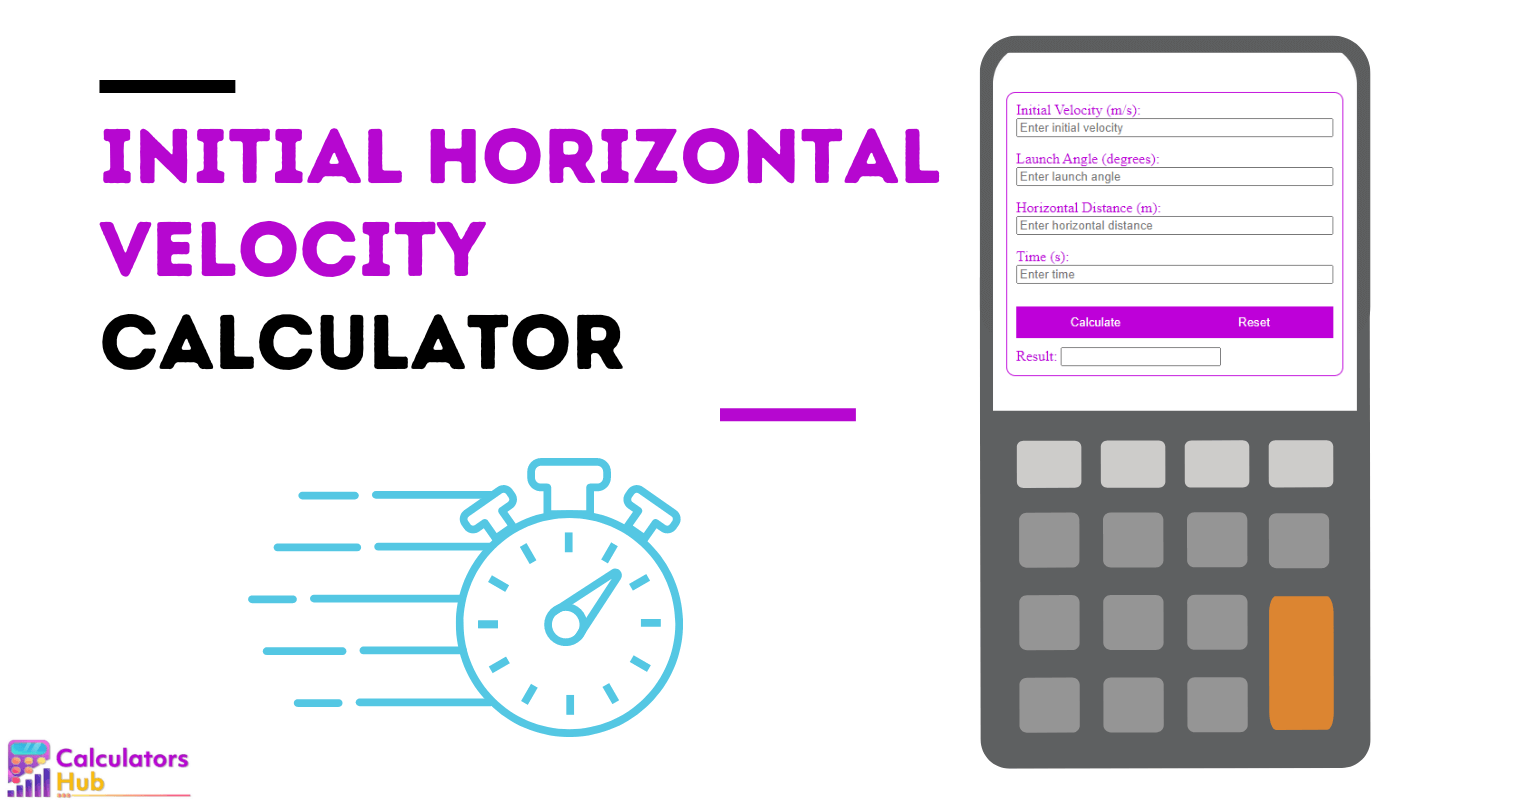 Initial Horizontal Velocity Calculator